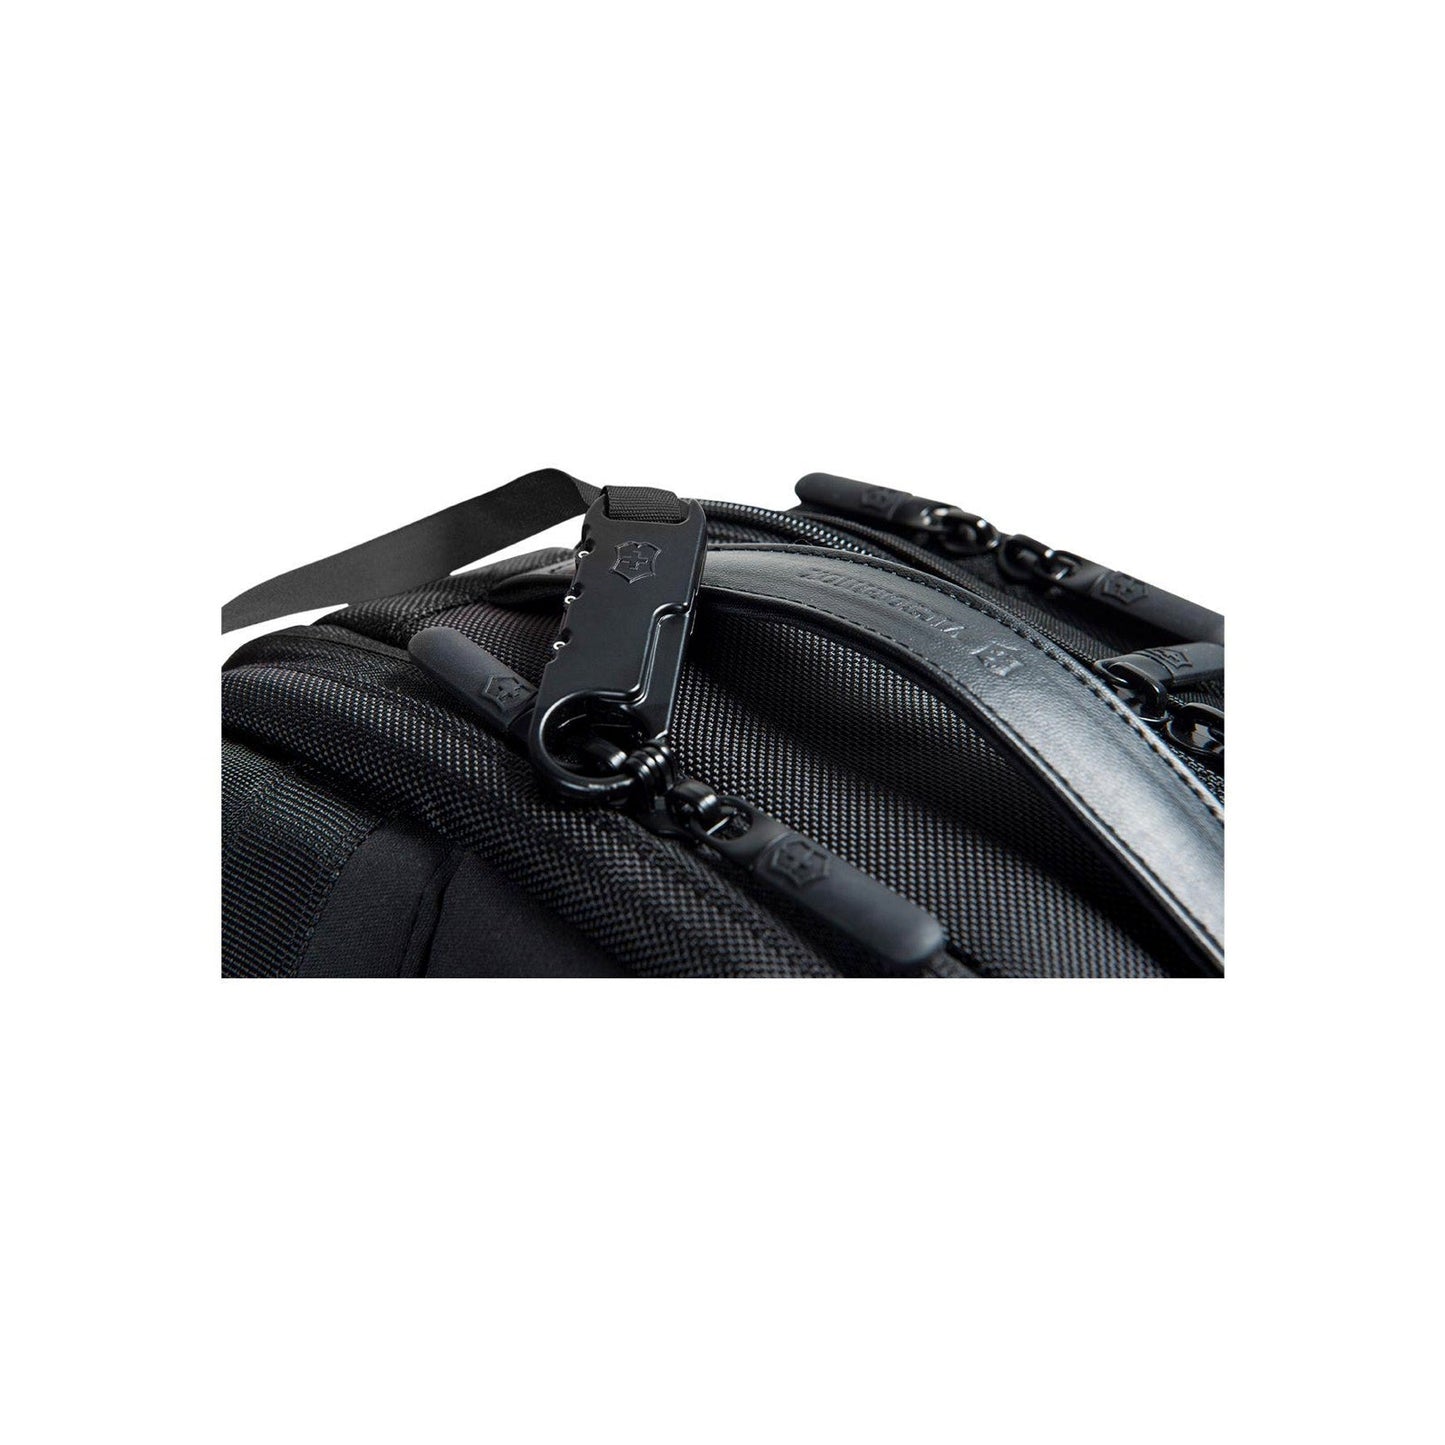 Victorinox Altmont Professional Essentials Laptop Backpack (602154)